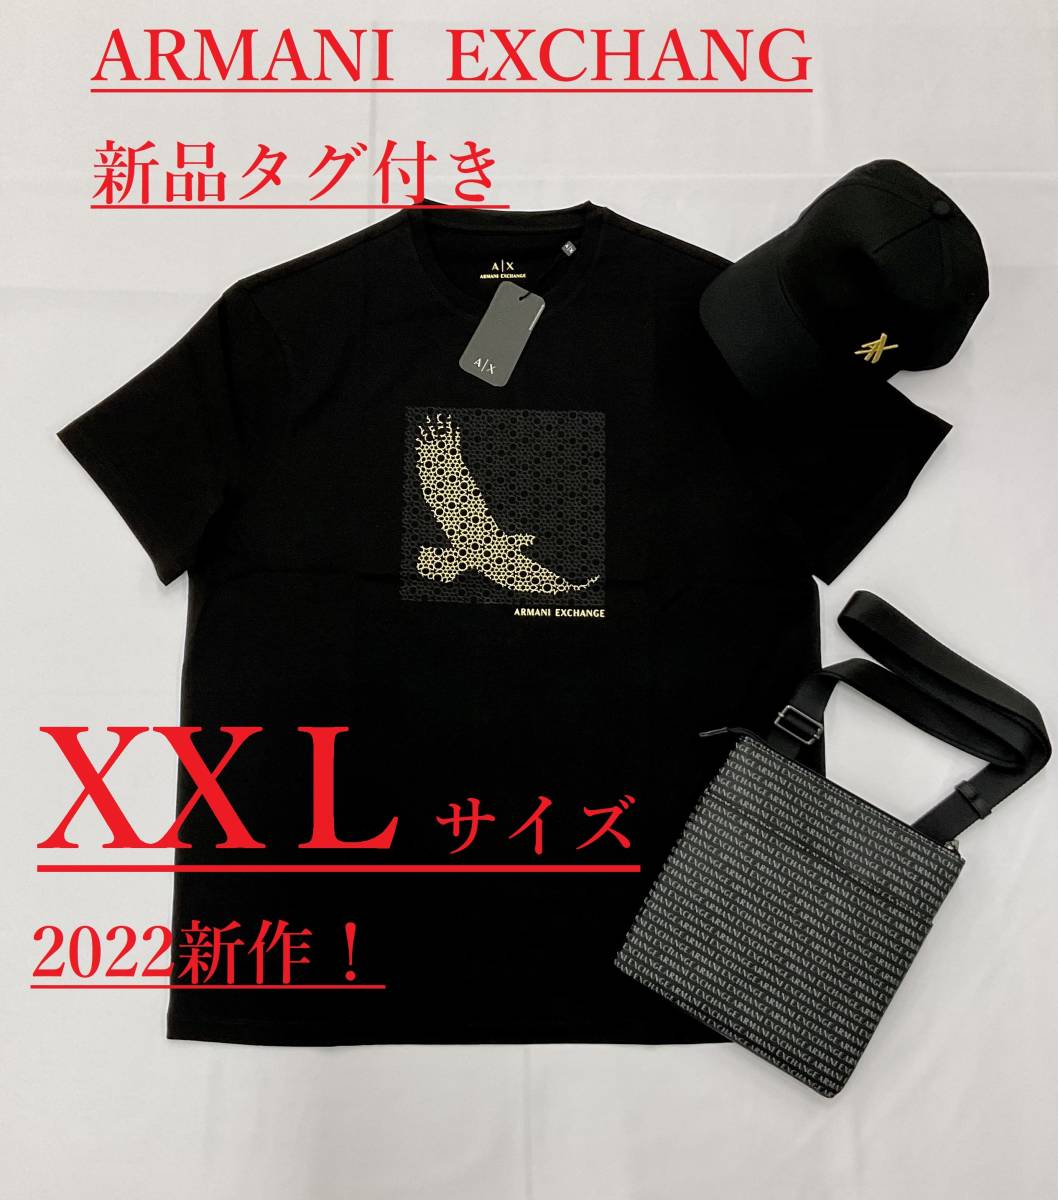 AXロゴ Tシャツ 0322 XXLサイズ 新品タグ付き ギフトにも 3LZTND ZJ9AZ 02DX 2022新作 ブラック アルマーニ  エクスチェンジ